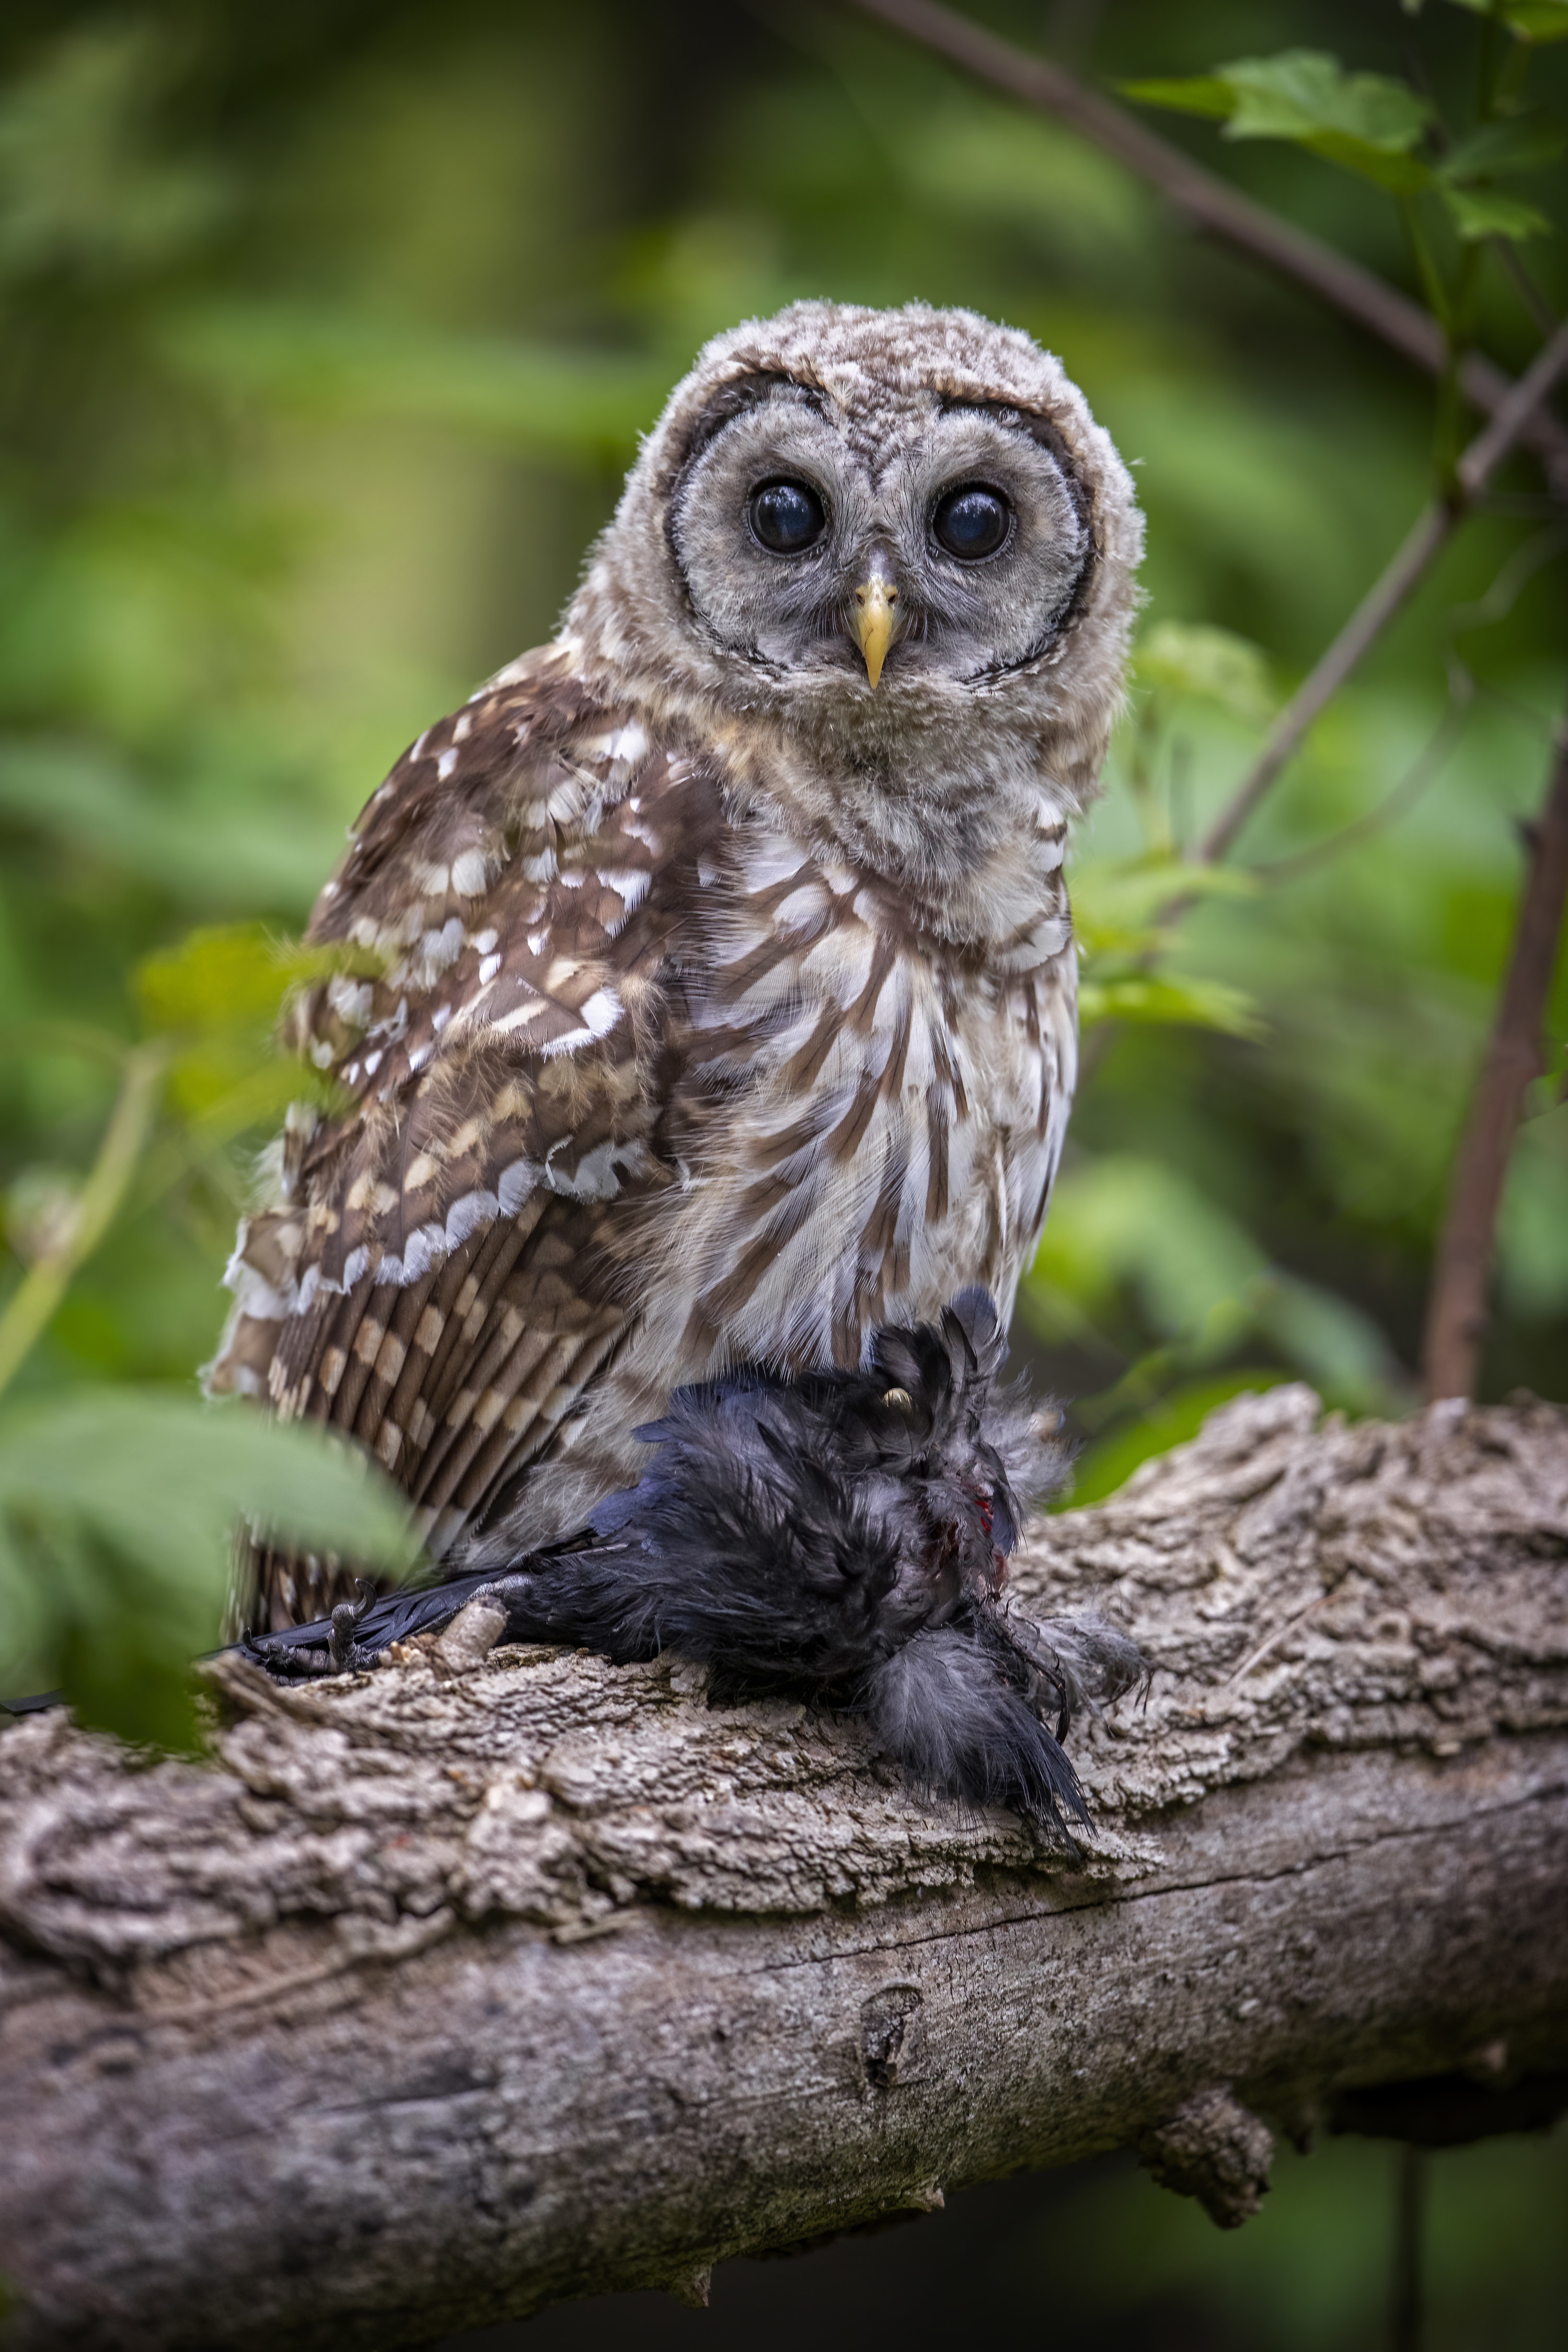 A barred owl